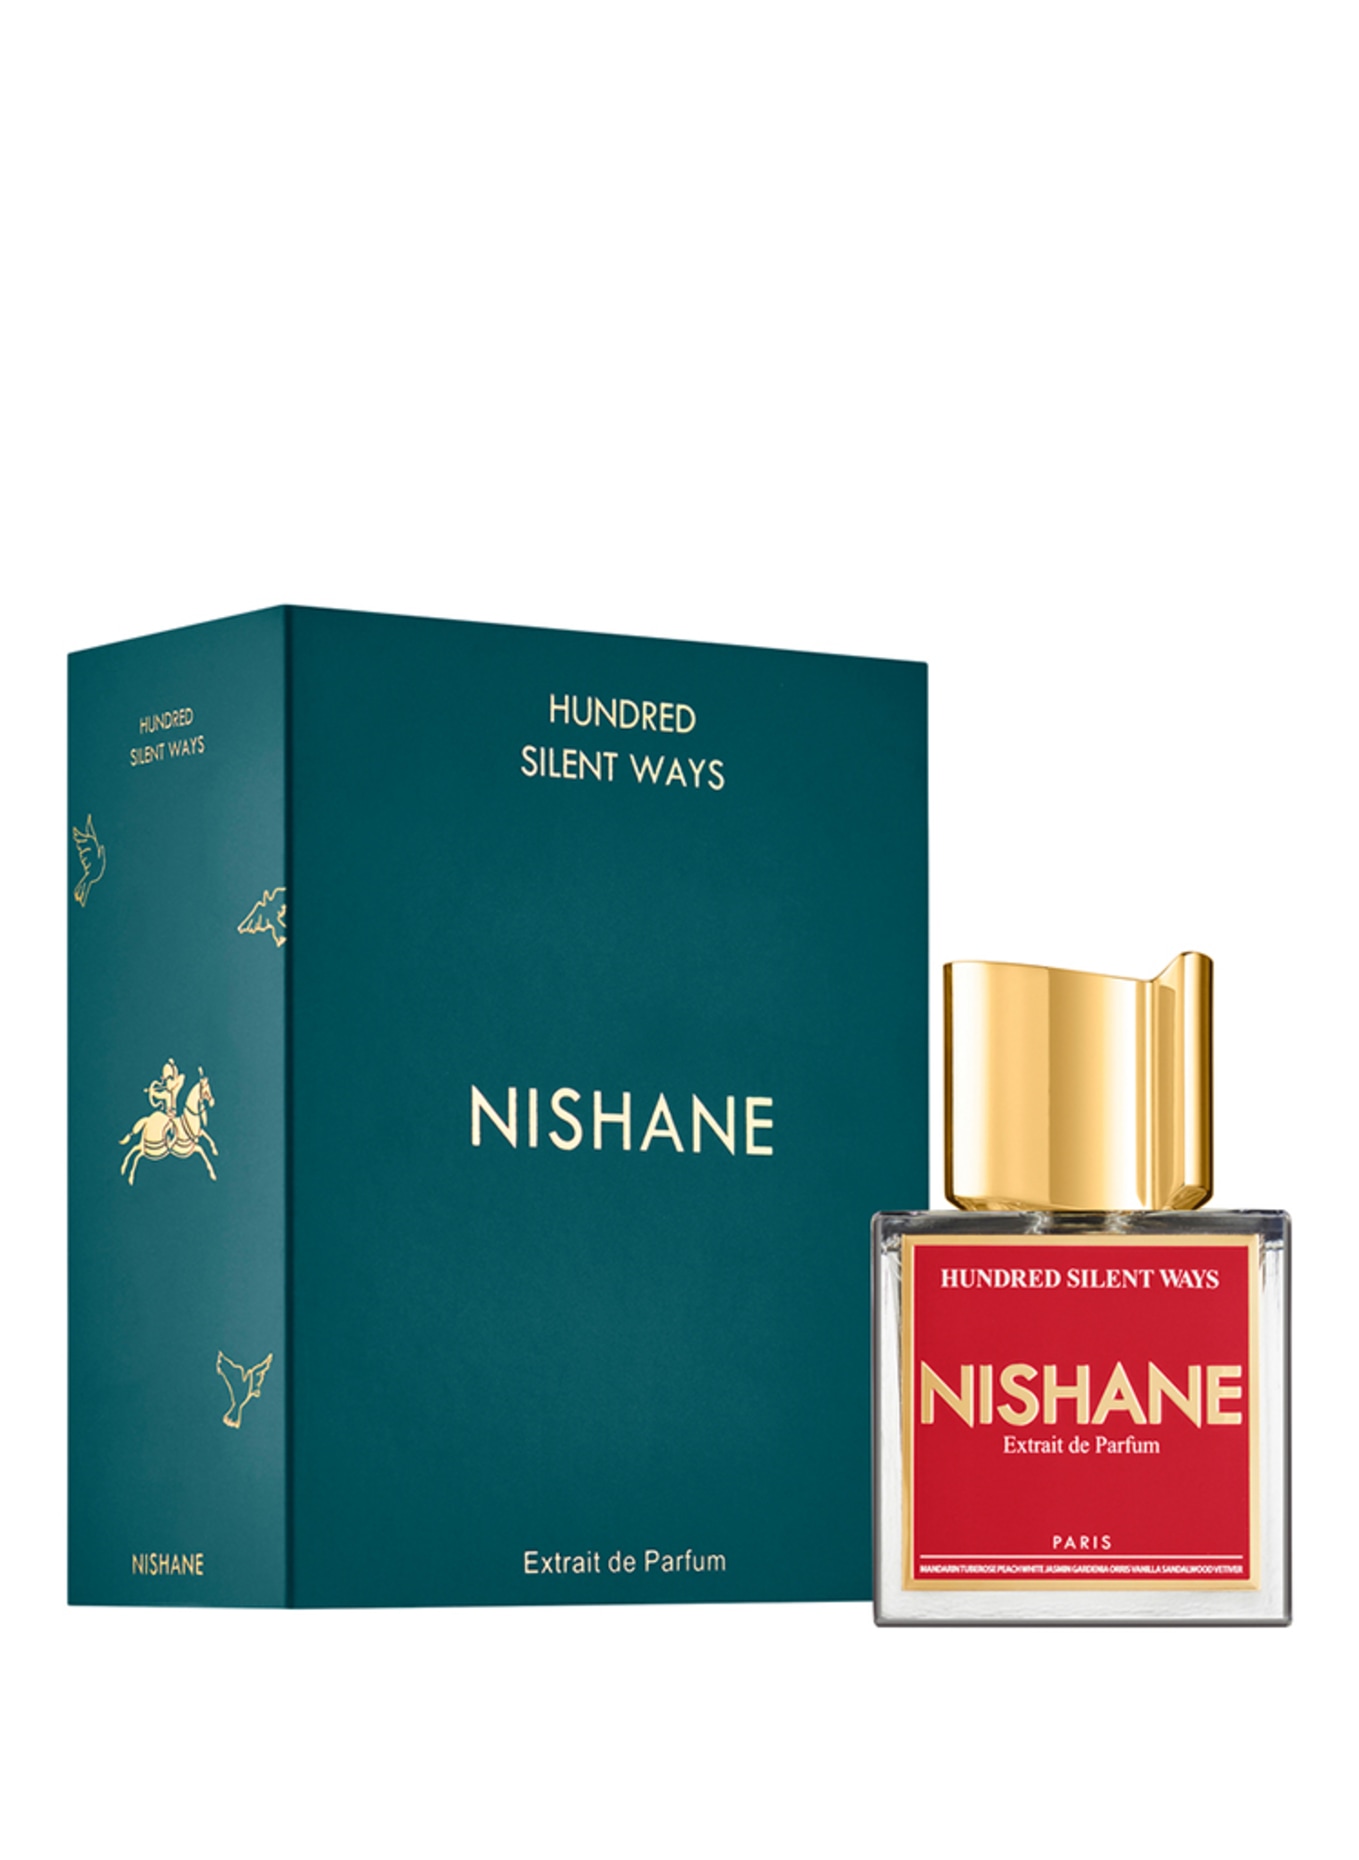 NISHANE HUNDRED SILENT WAYS Extrait de Parfum